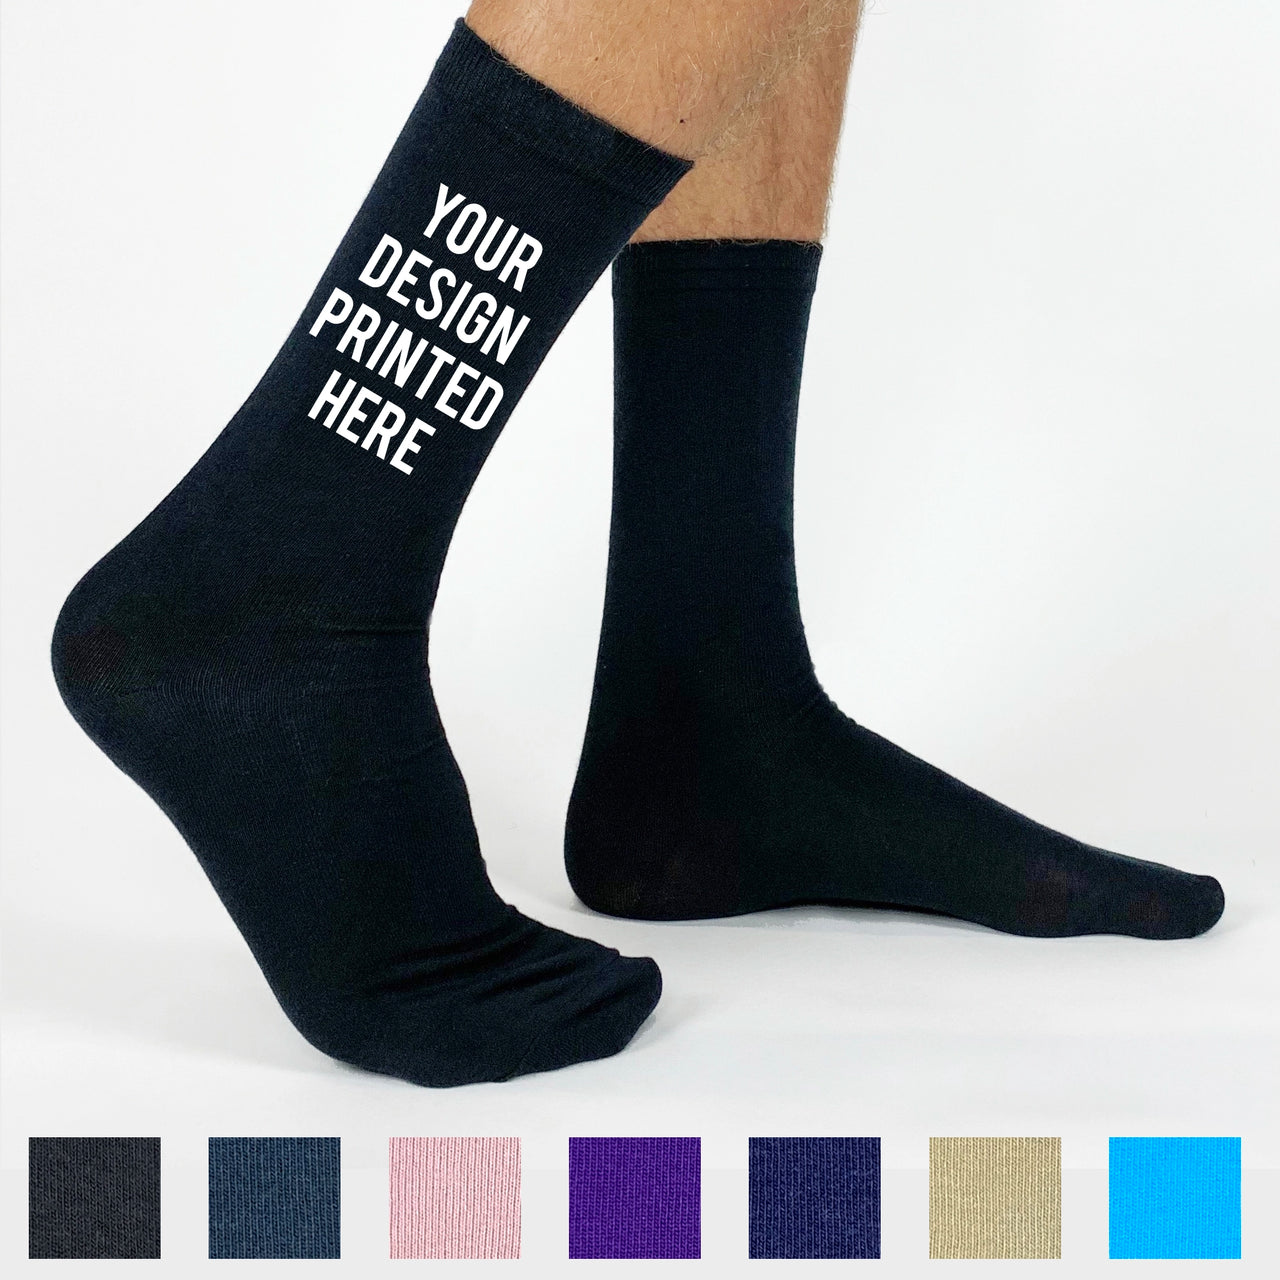 Custom Printed Flat Knit Dress Socks for Men - Large